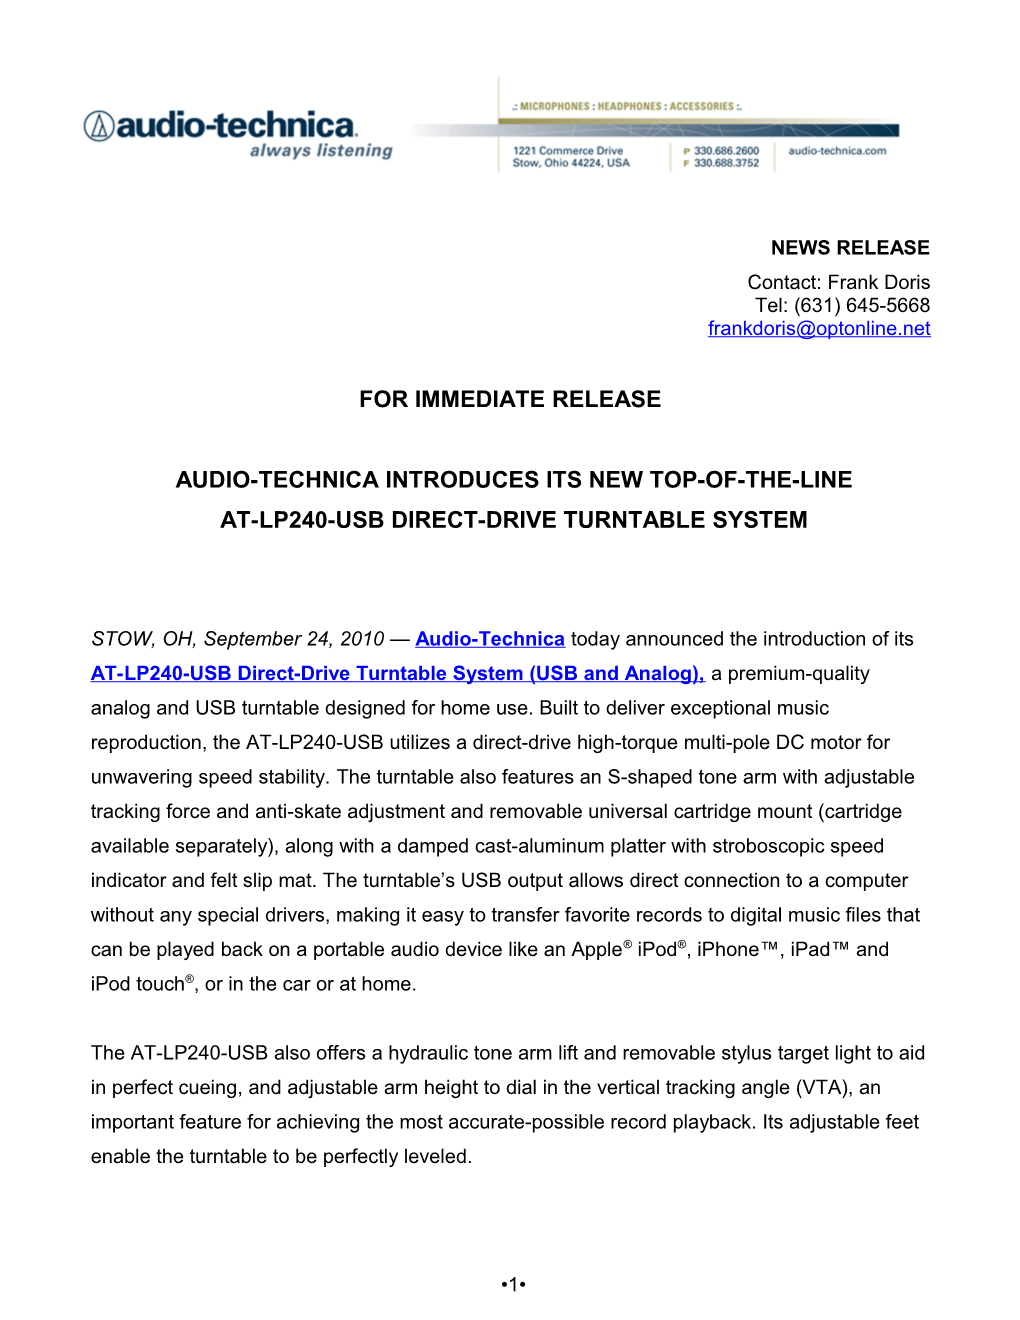 Audio-Technica ATR-LP240-USB Press Release